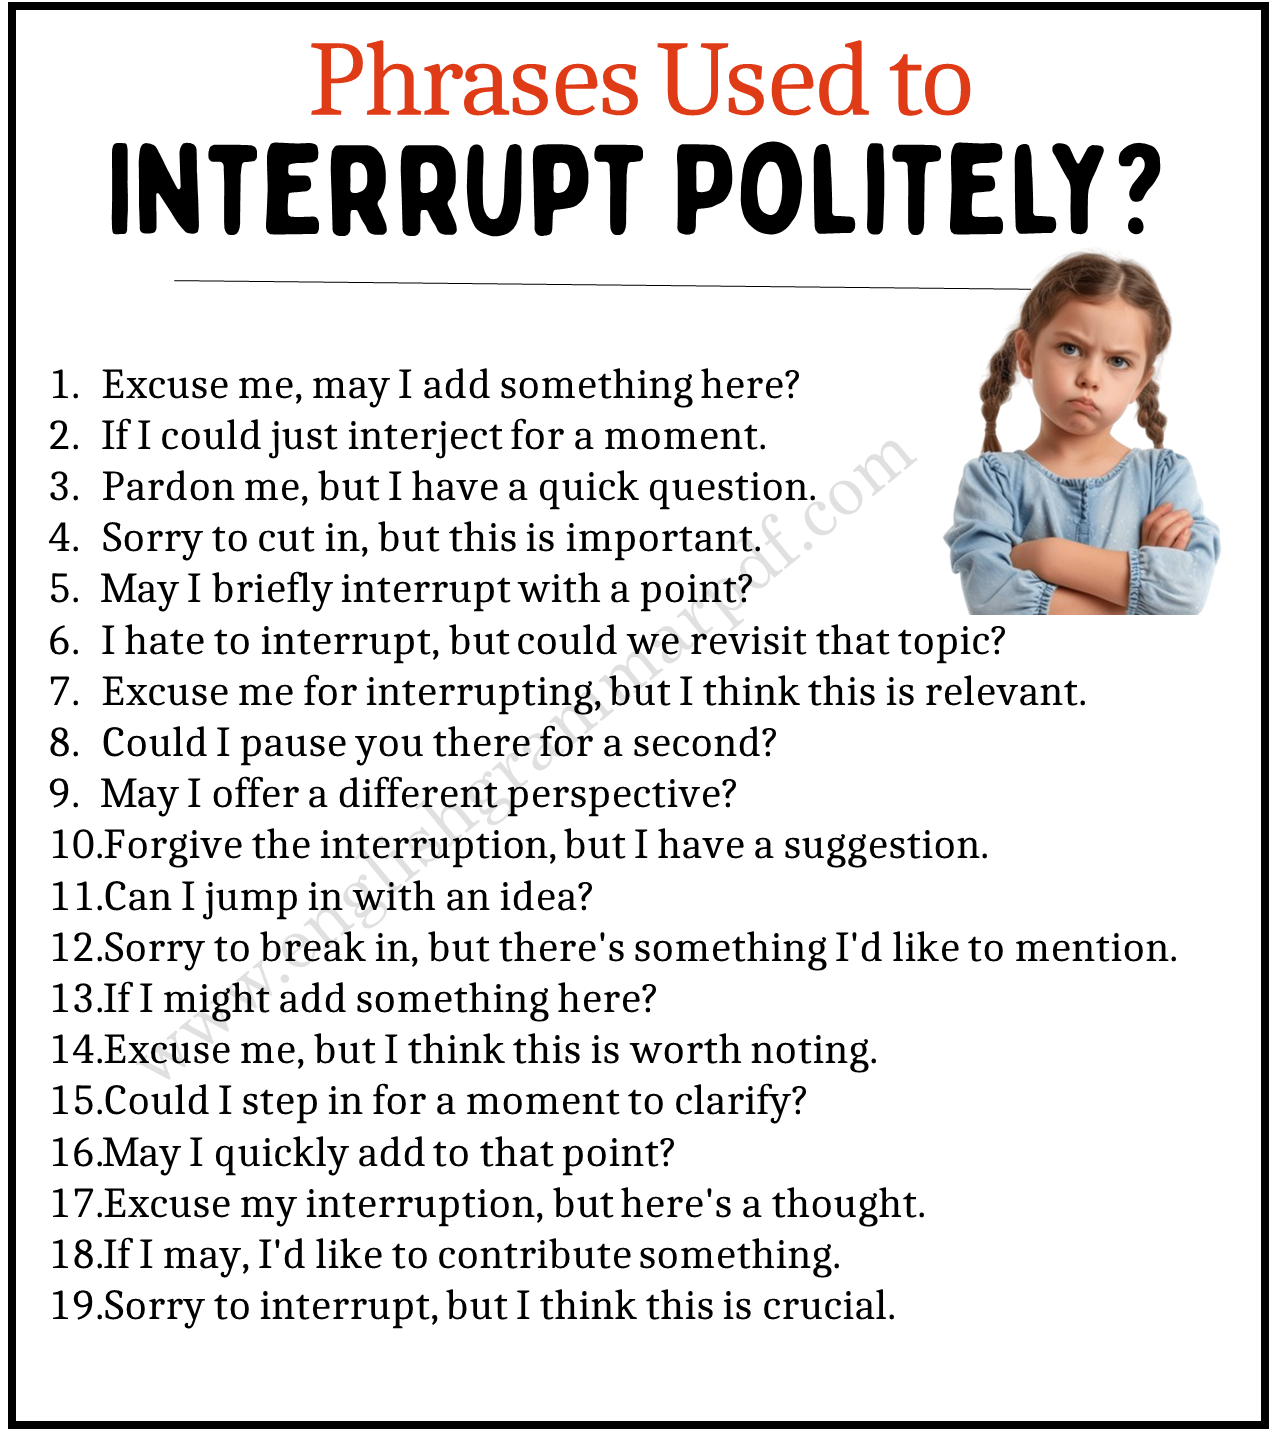 How to Interrupt Politely